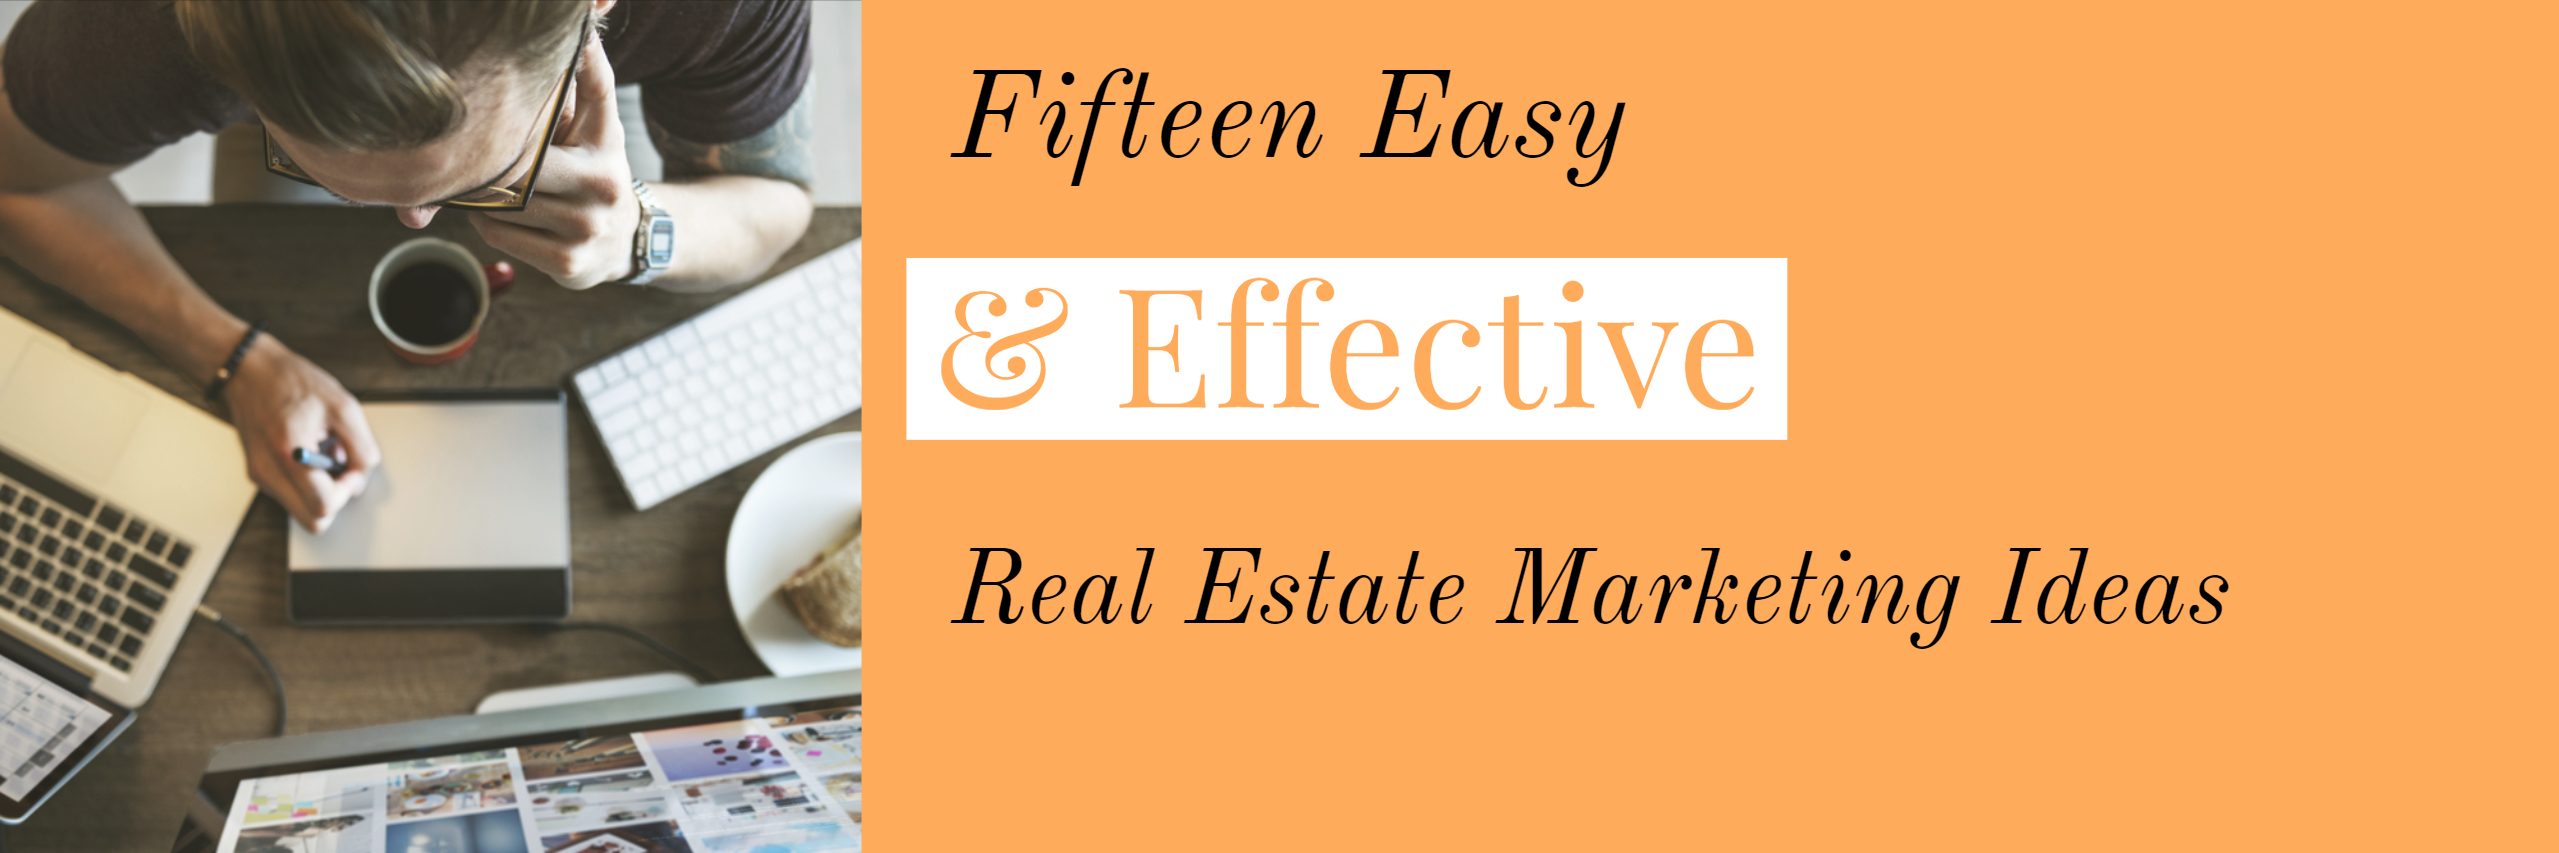 Fifteen Easy & Effective Real Estate Marketing Ideas